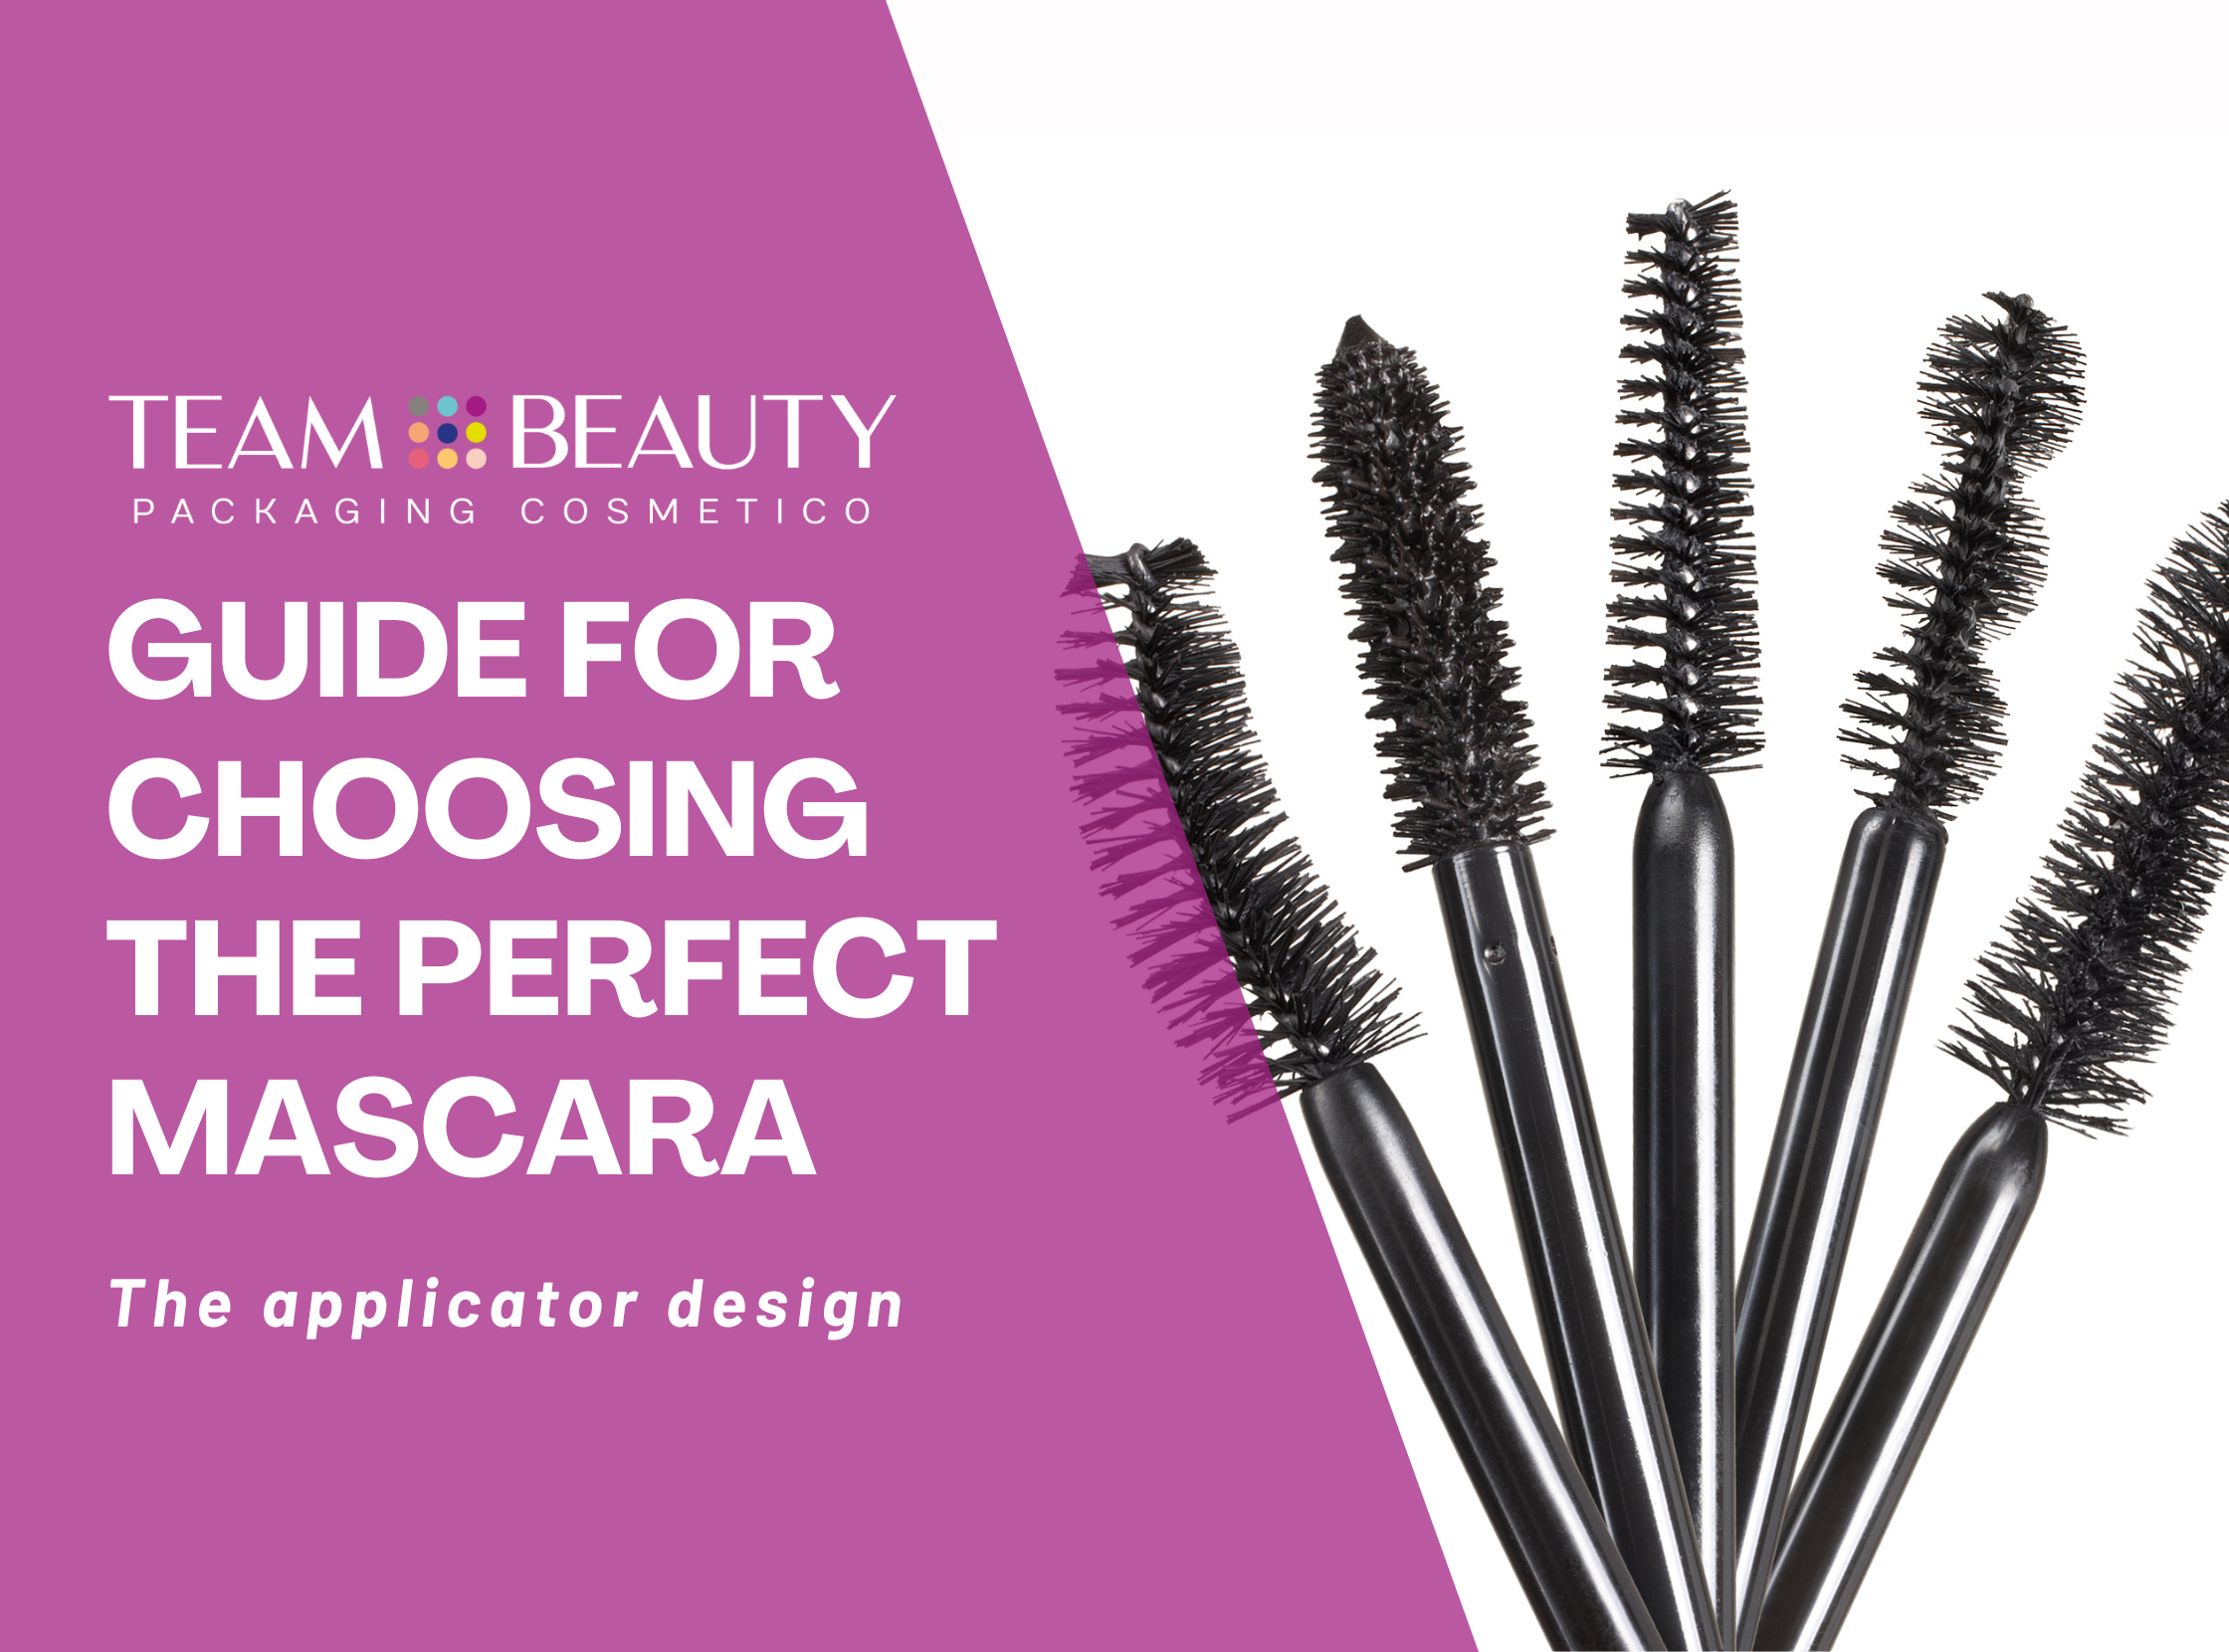 Guide to choosing the perfect mascara: applicator design